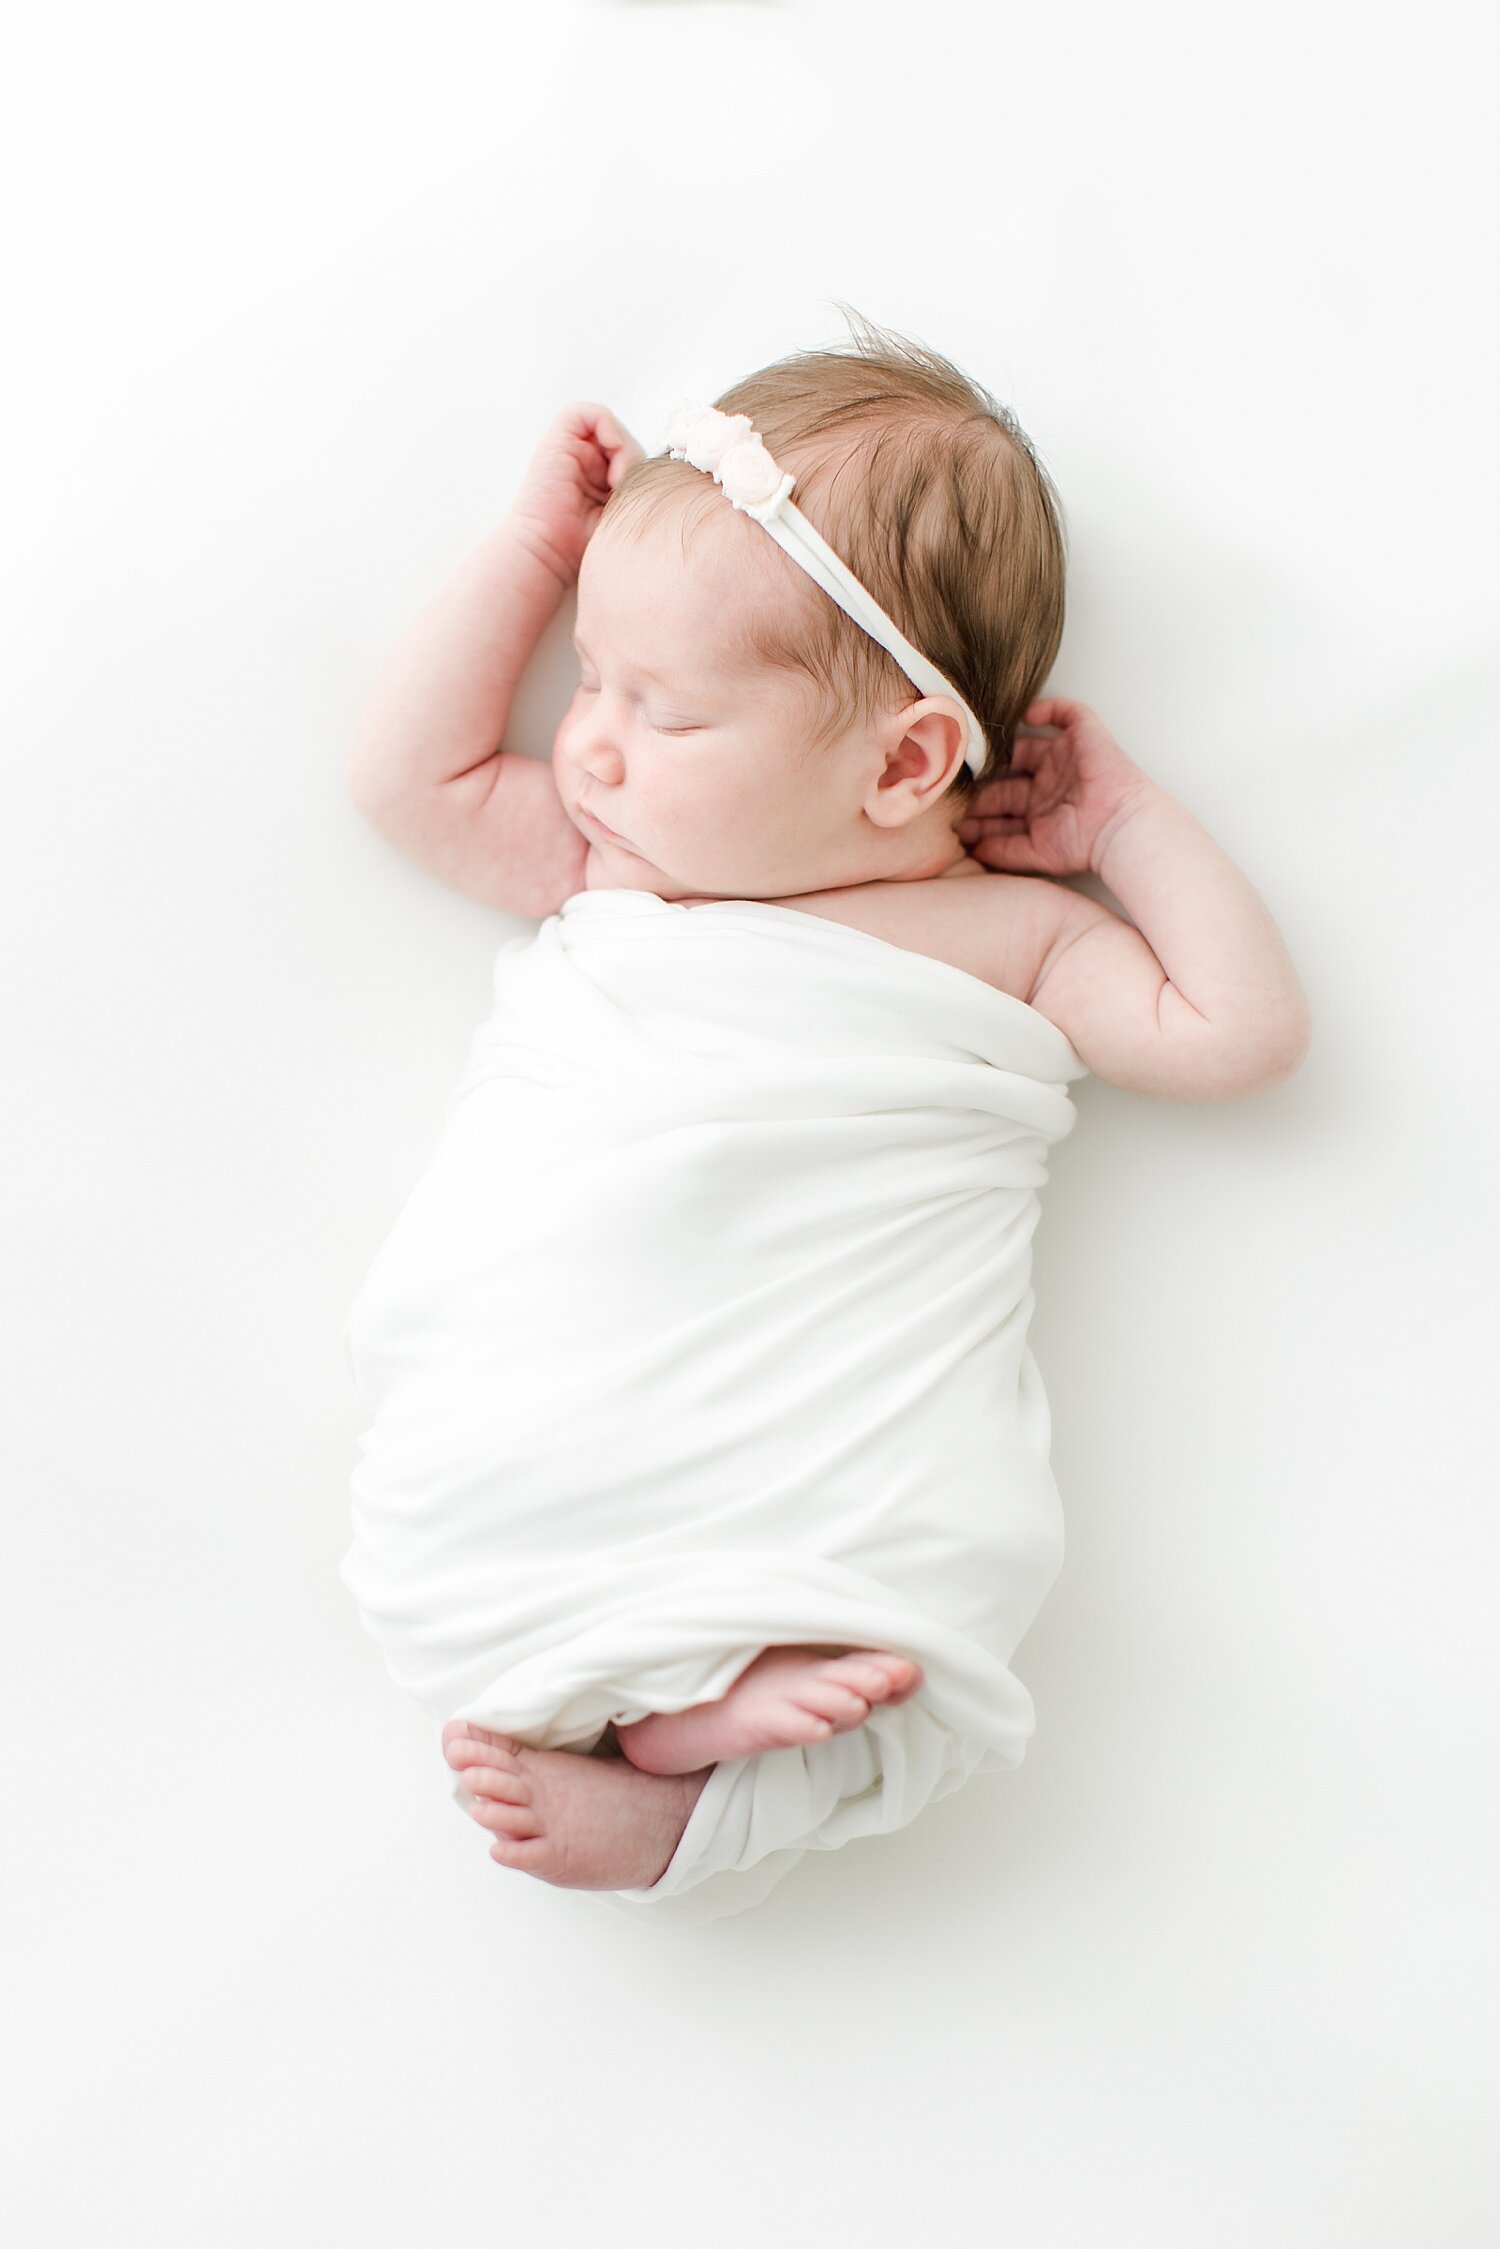 Studio newborn session in Darien, CT. Photos by Kristin Wood Photography.